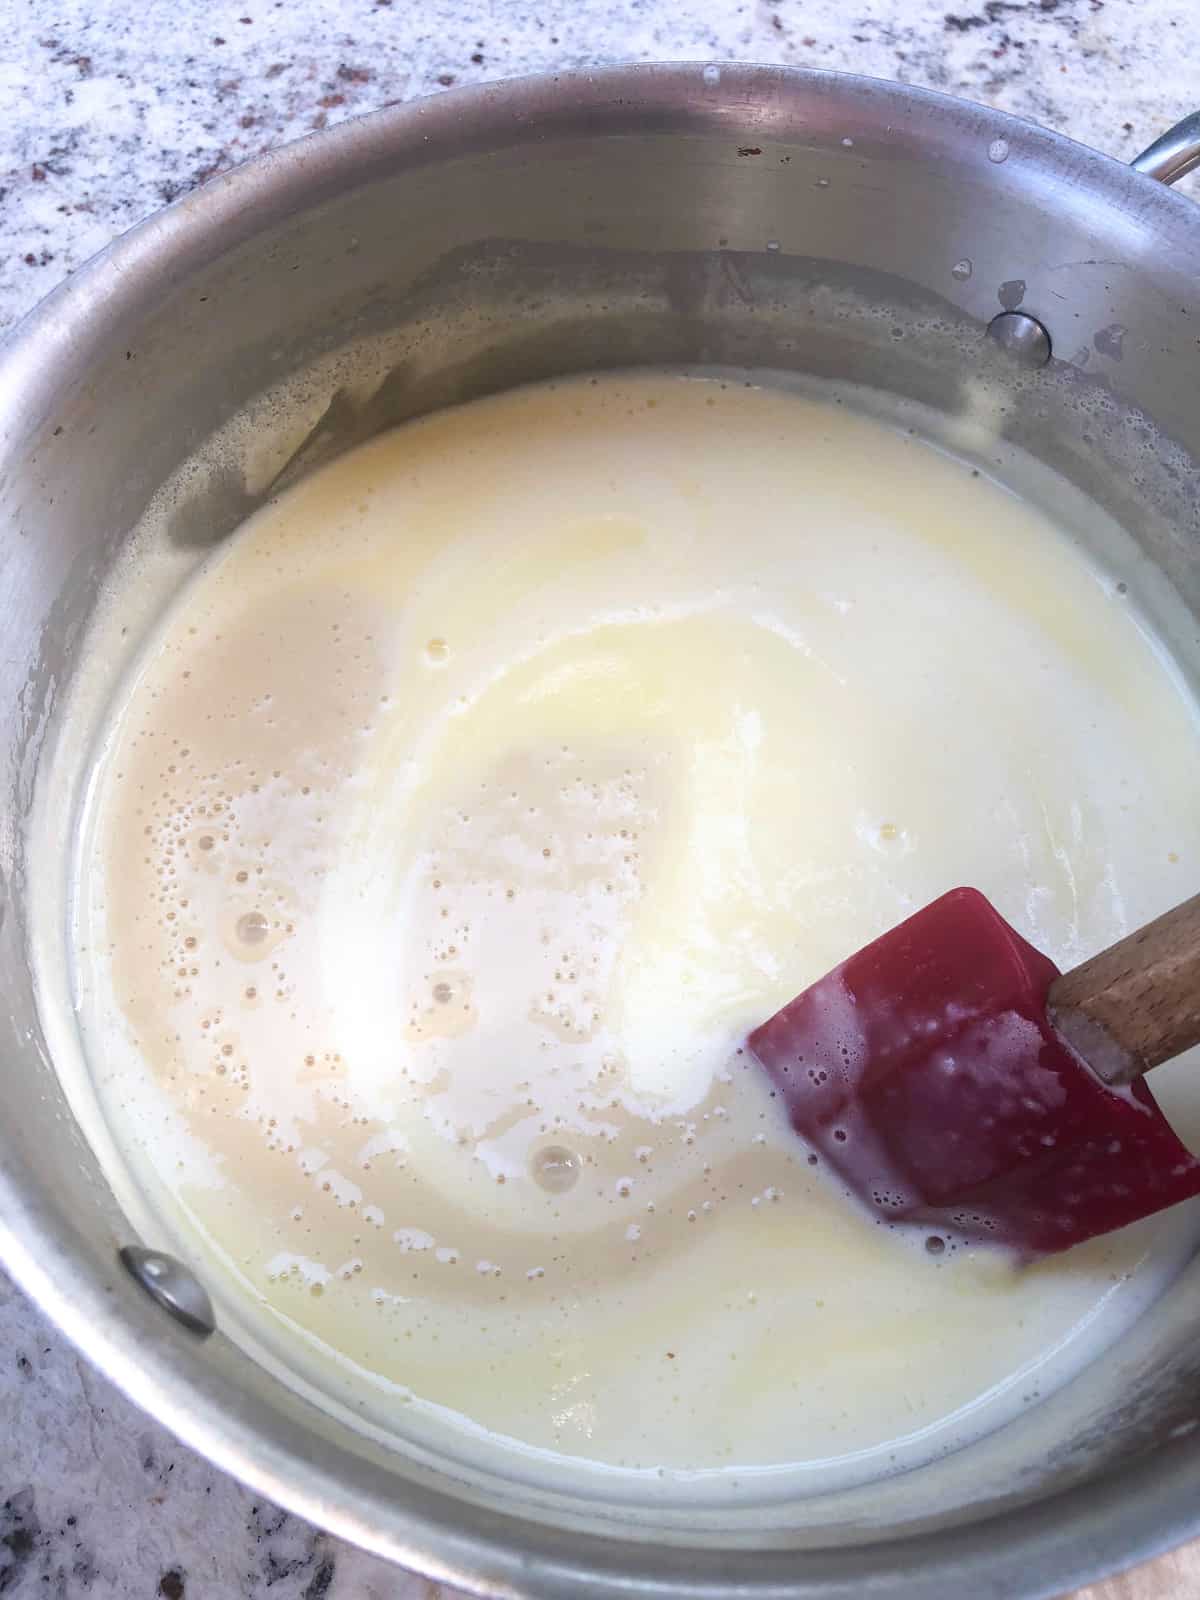 Pour the garlic mixture into the saucepan and heat through. 